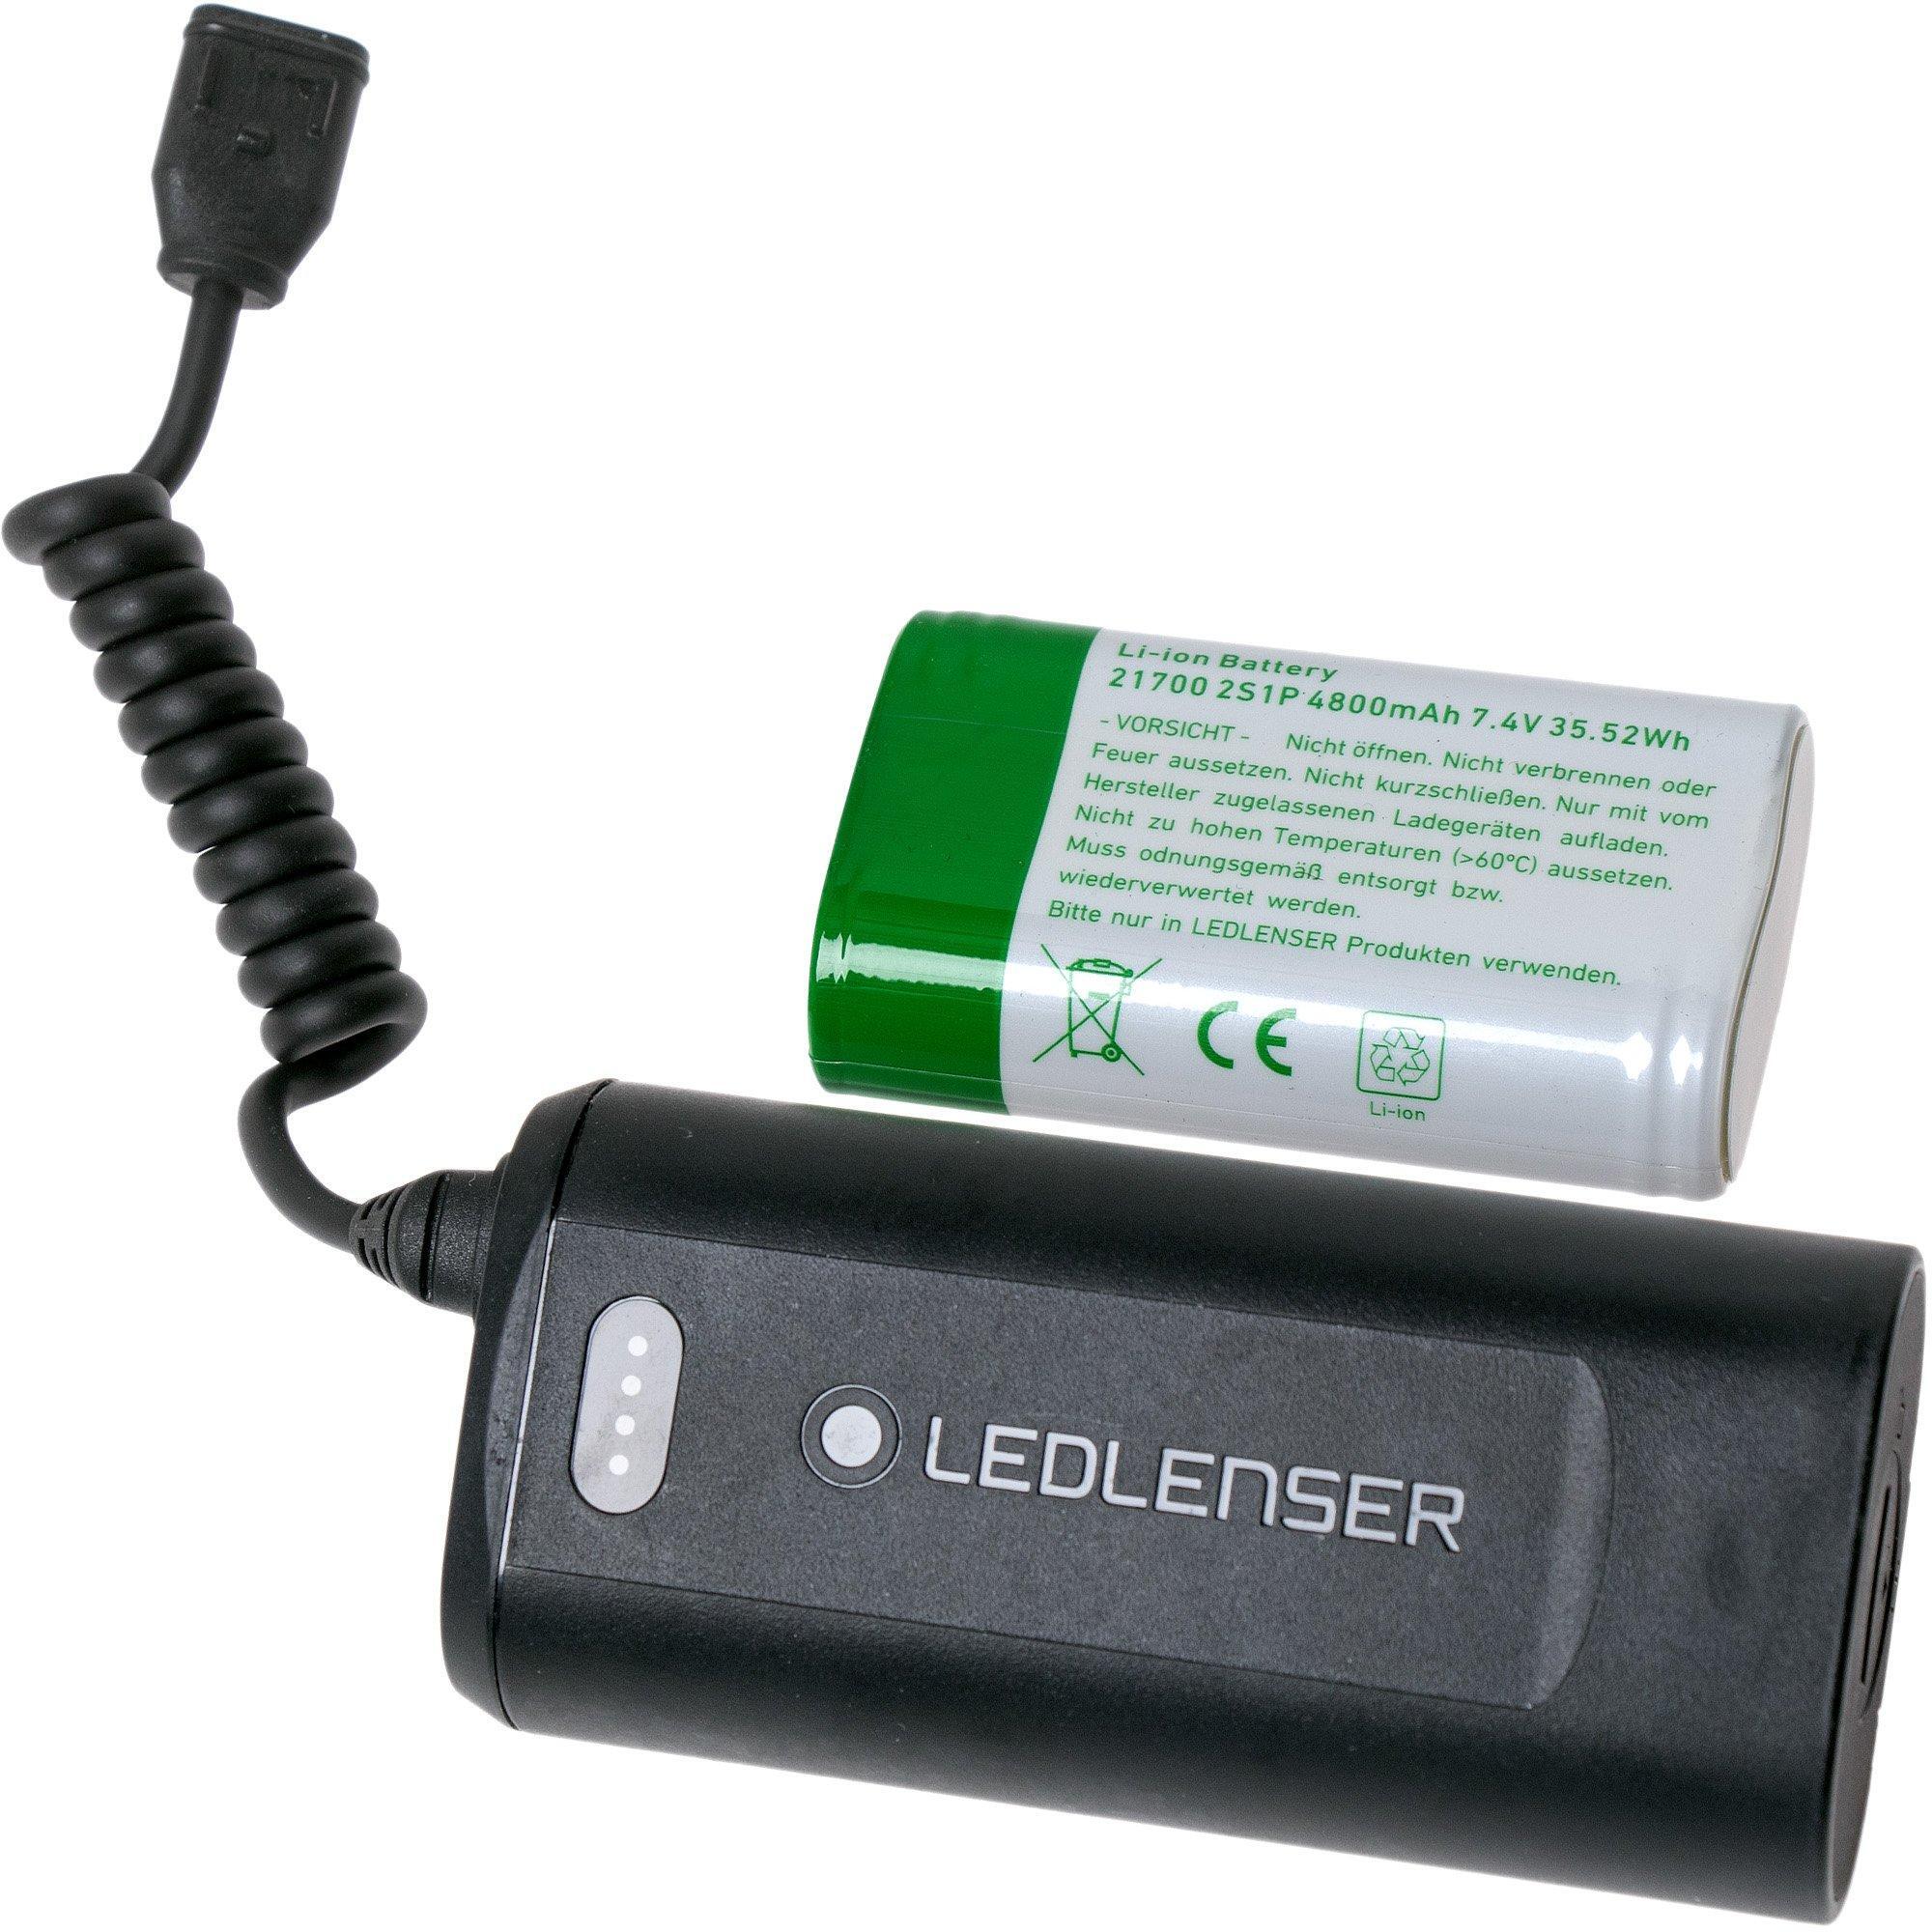 Led Lenser Ledlenser 2x 21700 Bluetooth Battery box, bluetooth afstandsbediening